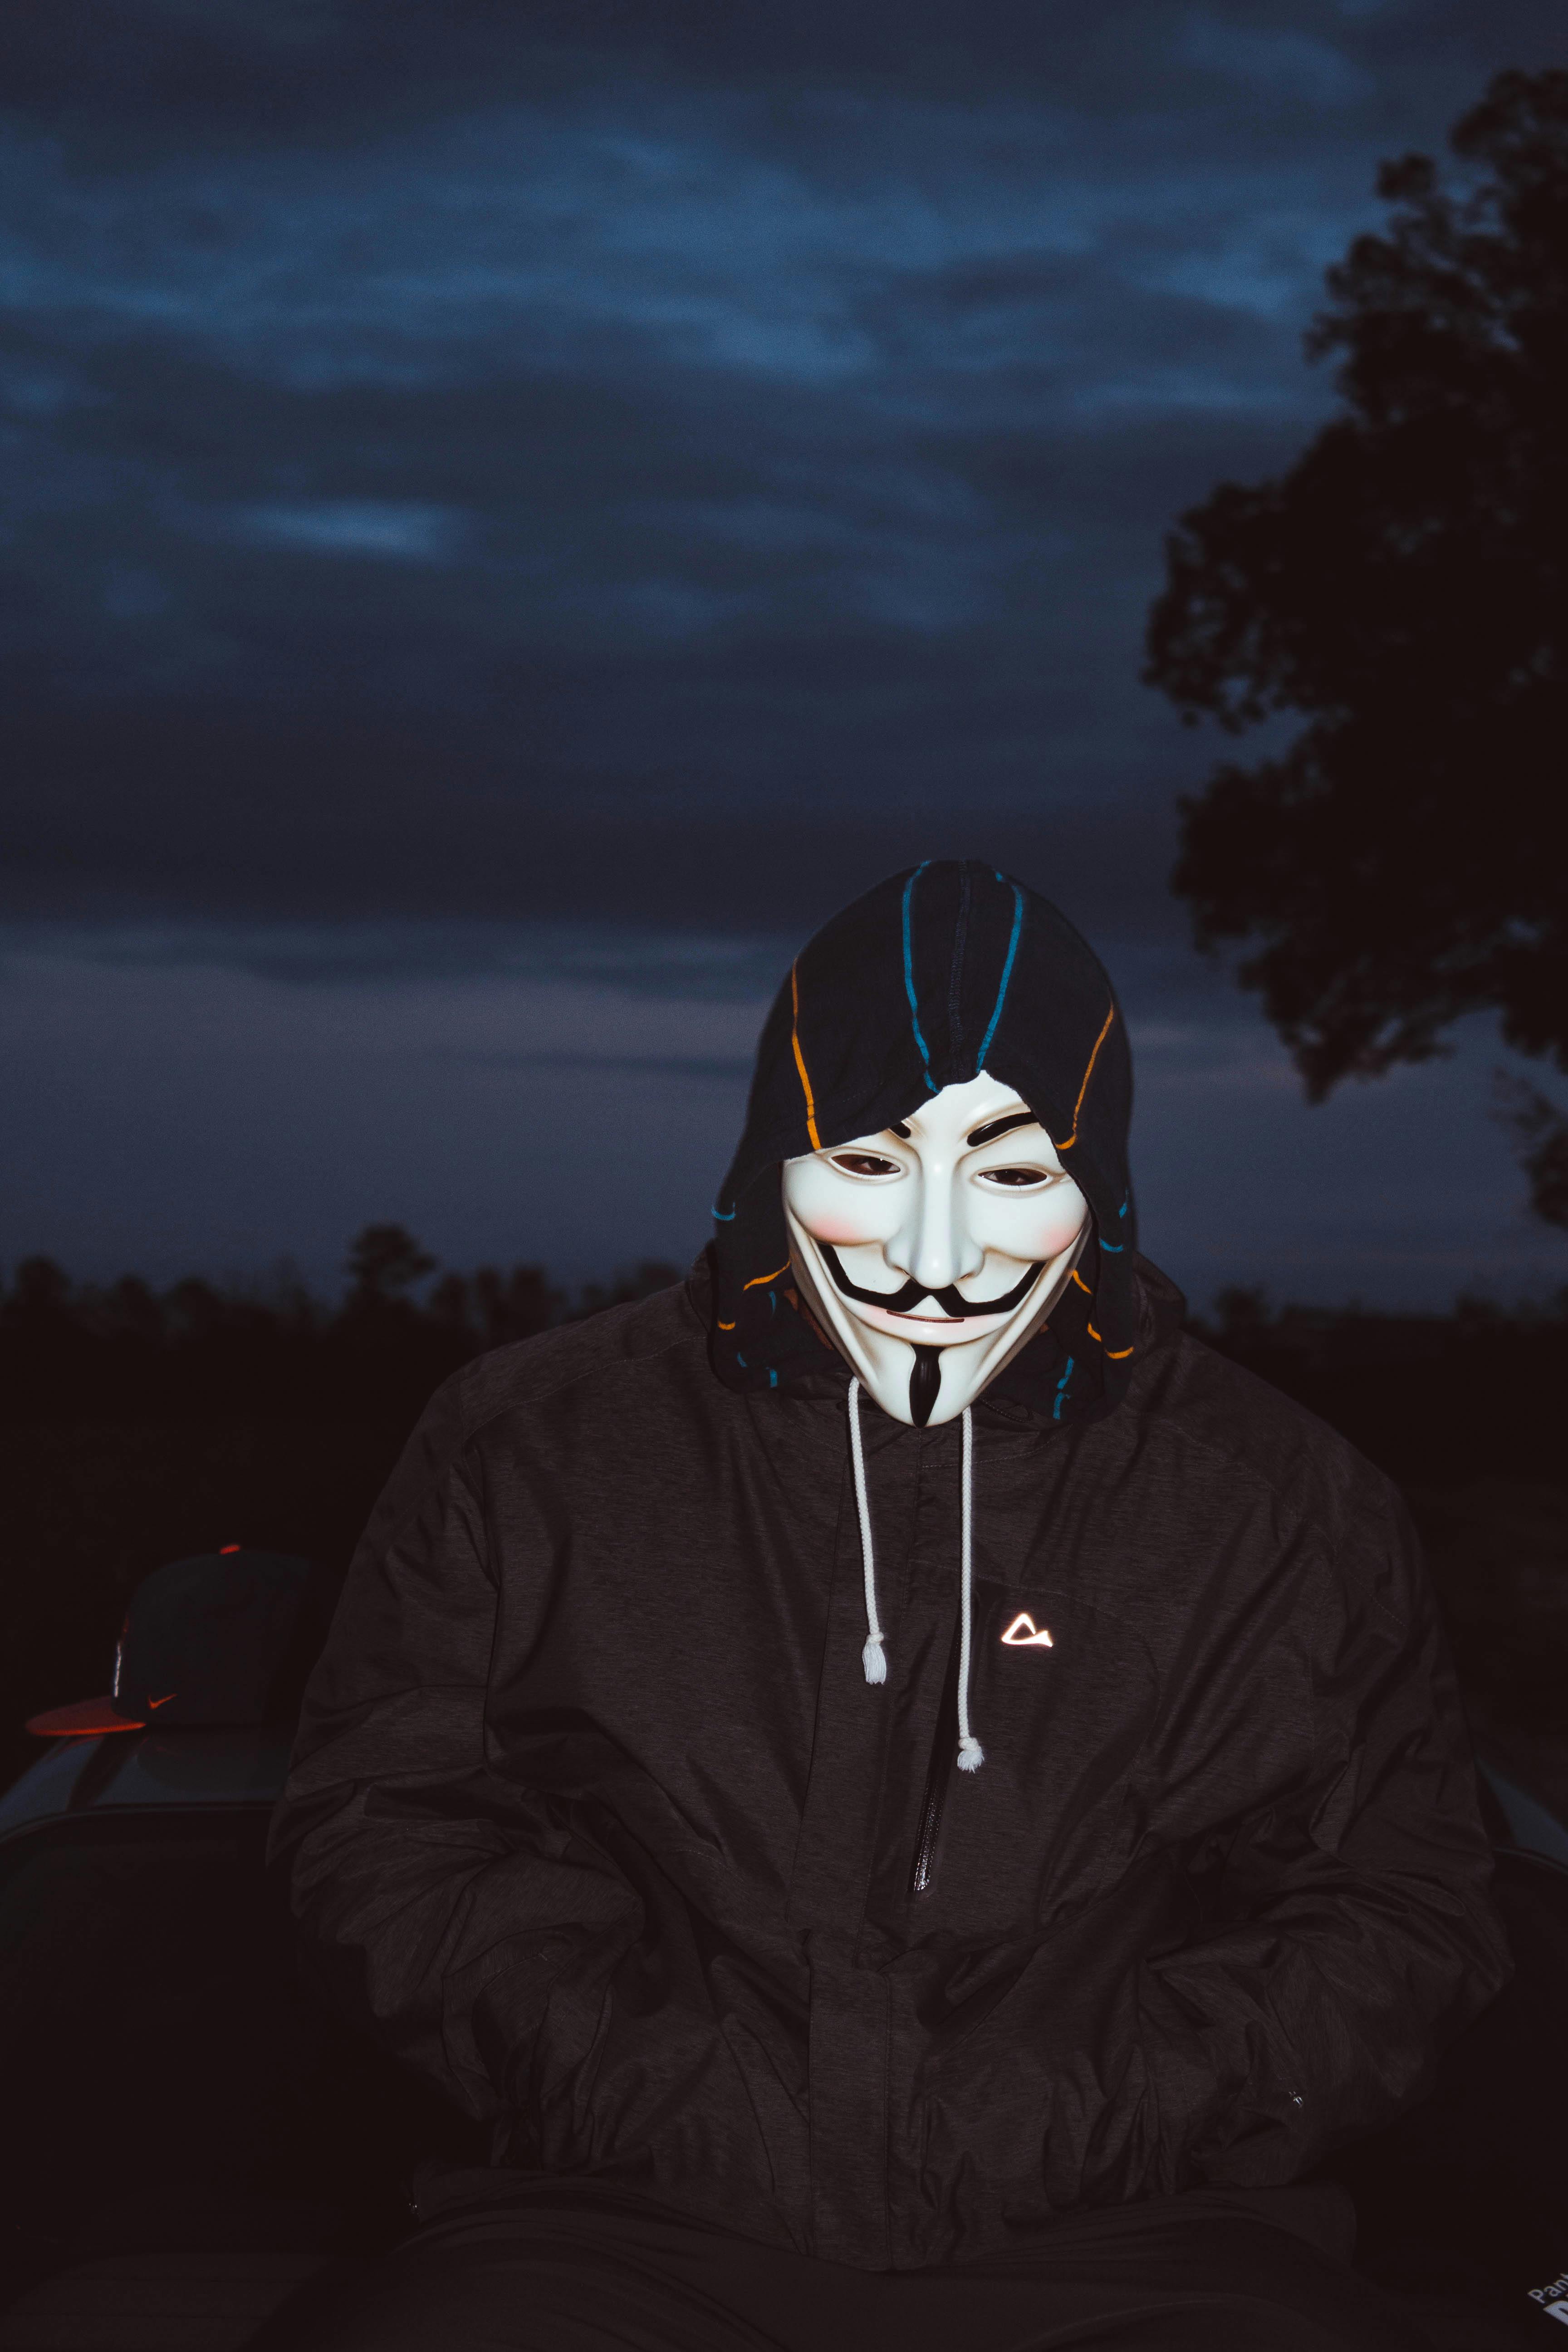 100+] Hacker Mask Wallpapers | Wallpapers.com